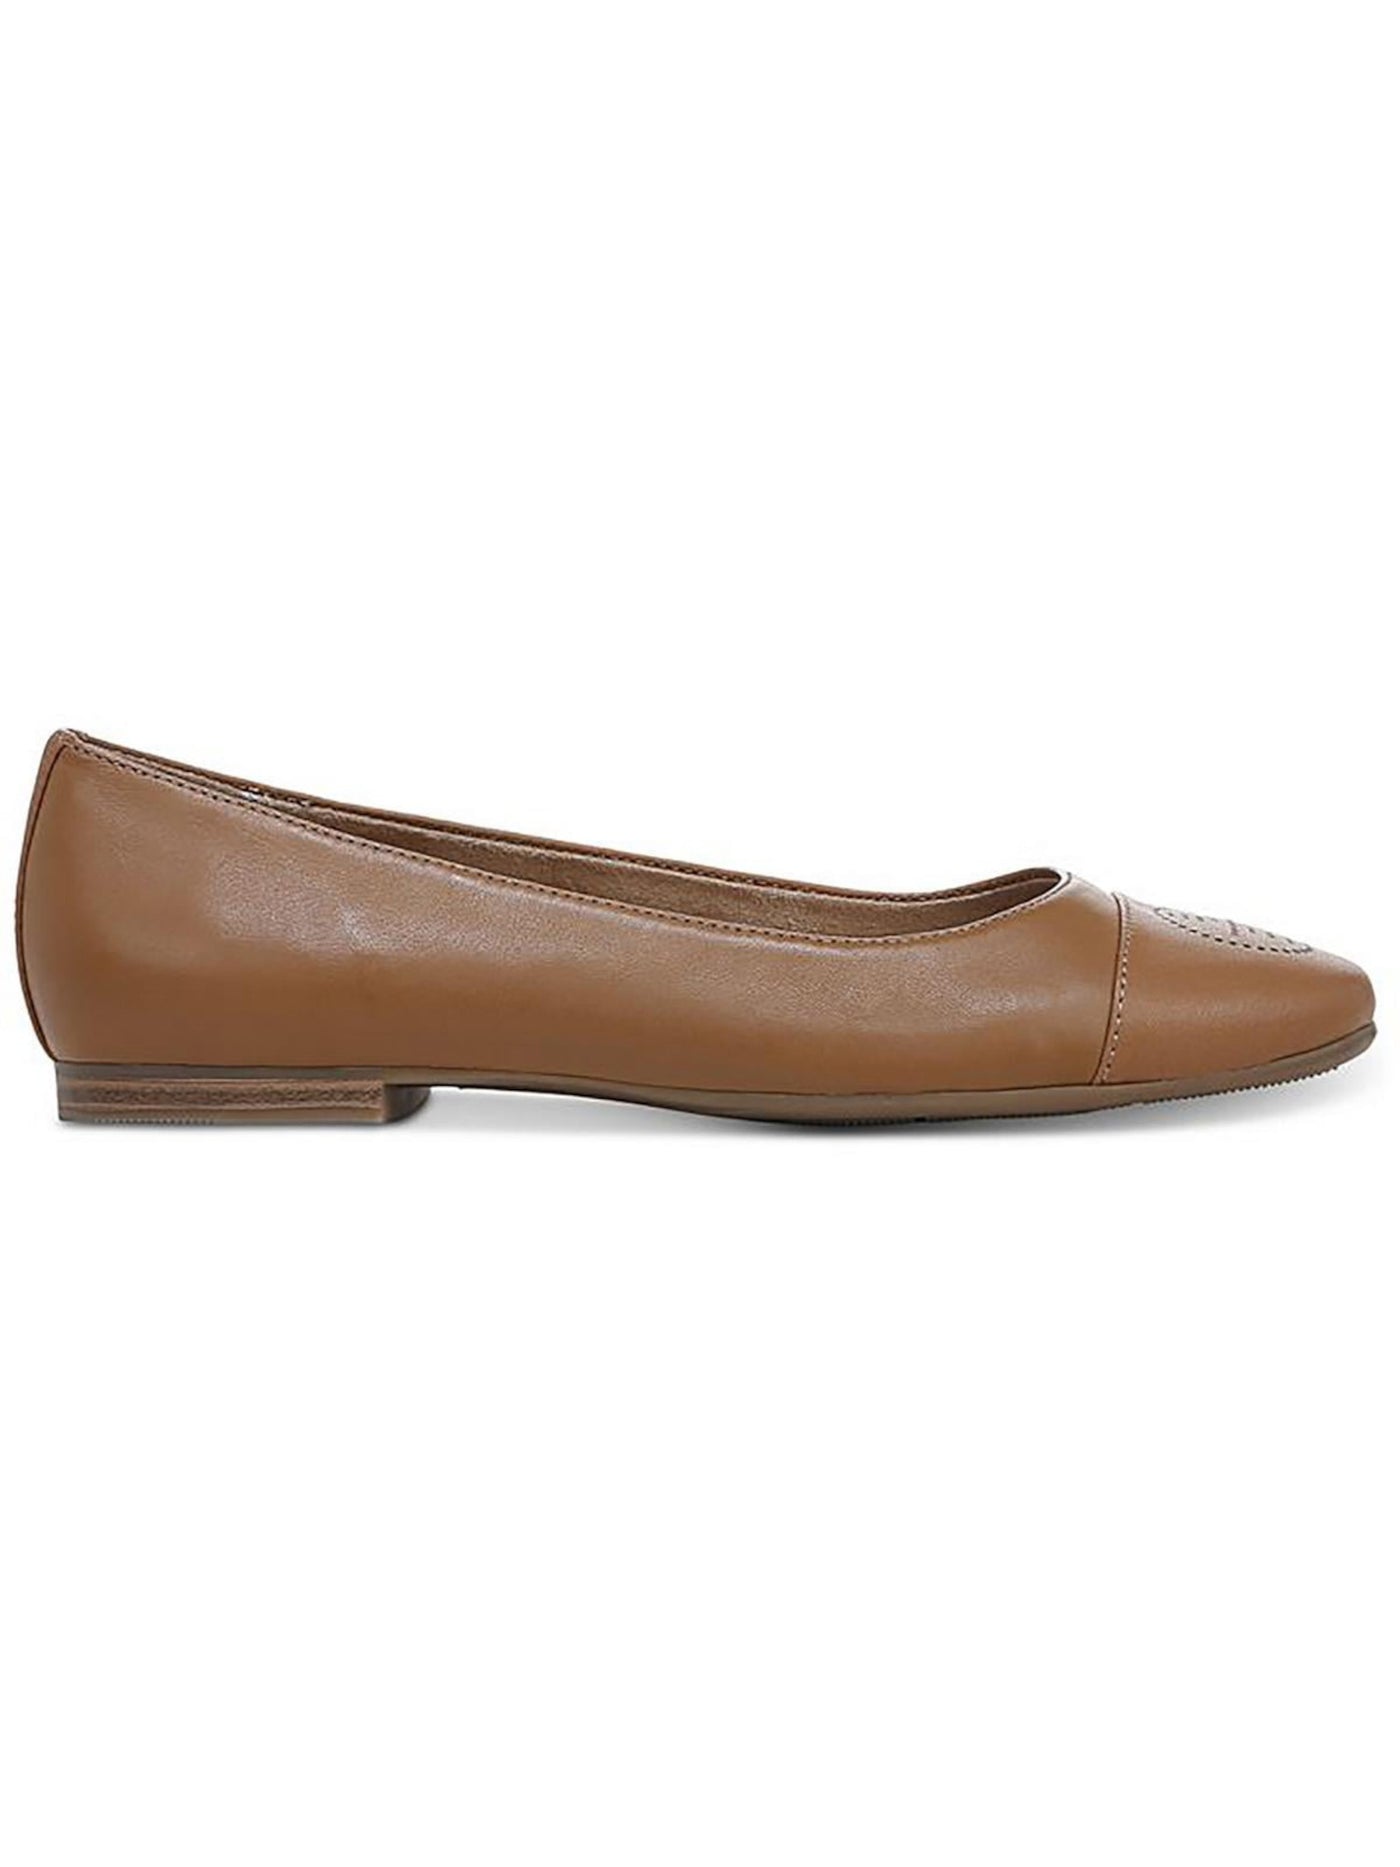 GIANI BERNINI Womens Beige Comfort Perforated Cushioned Aerinn Square Toe Slip On Leather Flats Shoes 5.5 M